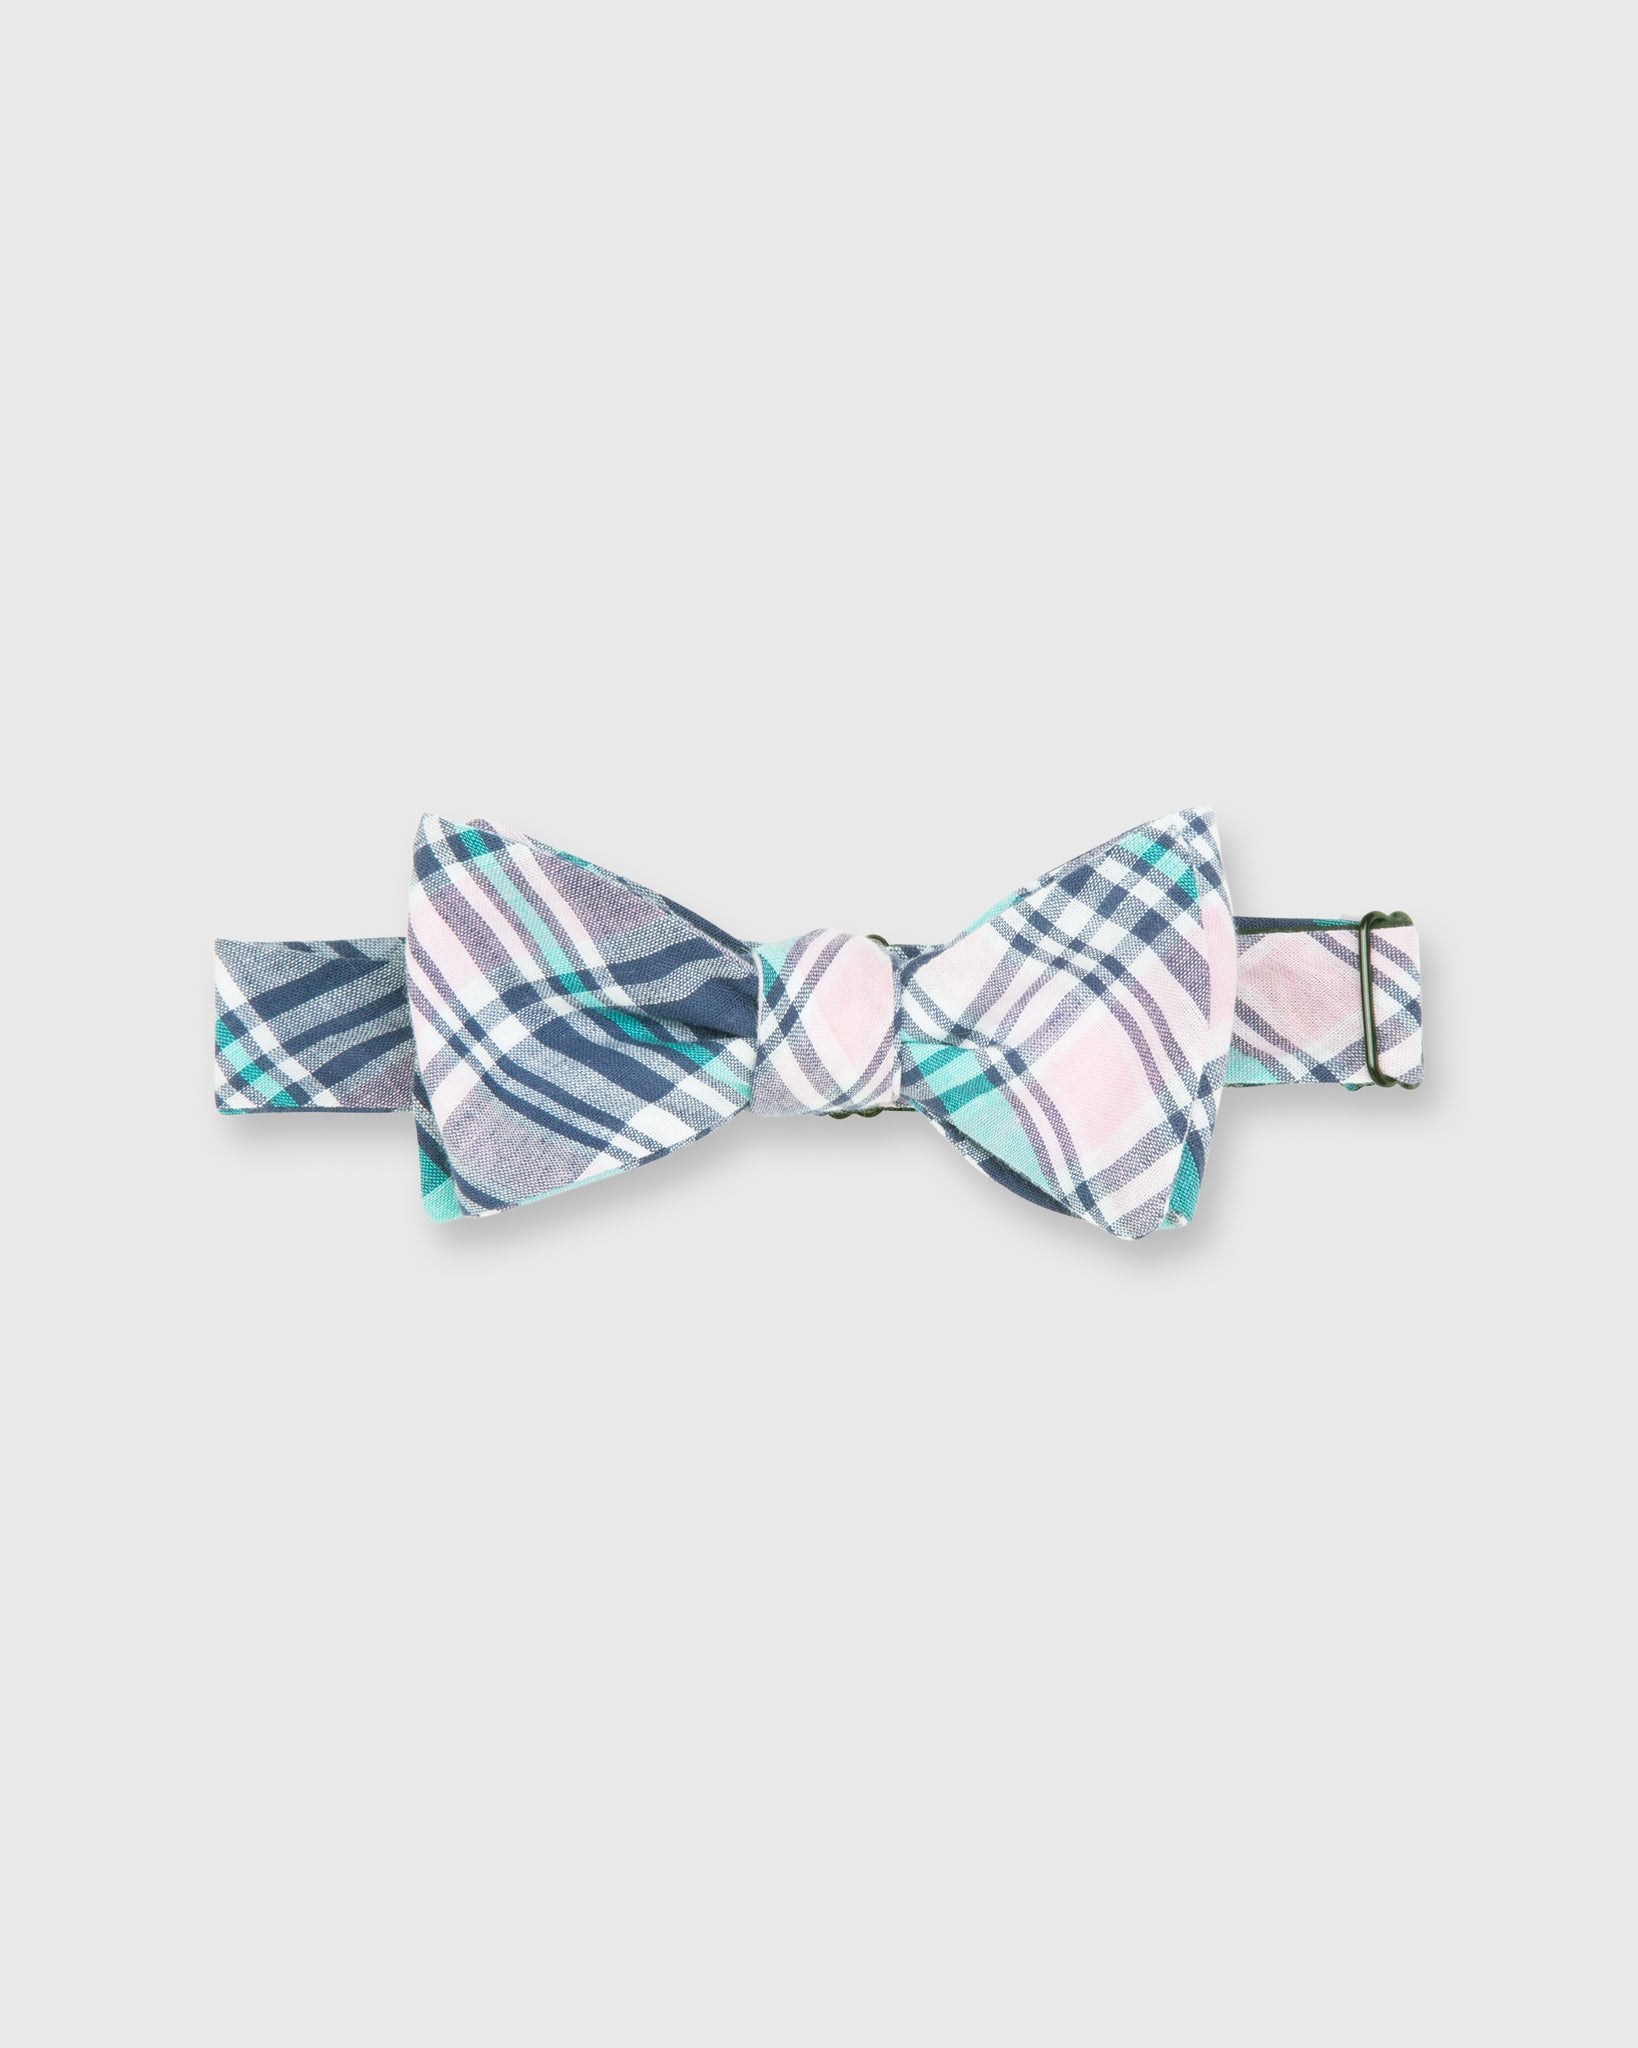 Cotton Woven Bow Tie Navy/Pink/Aqua Madras